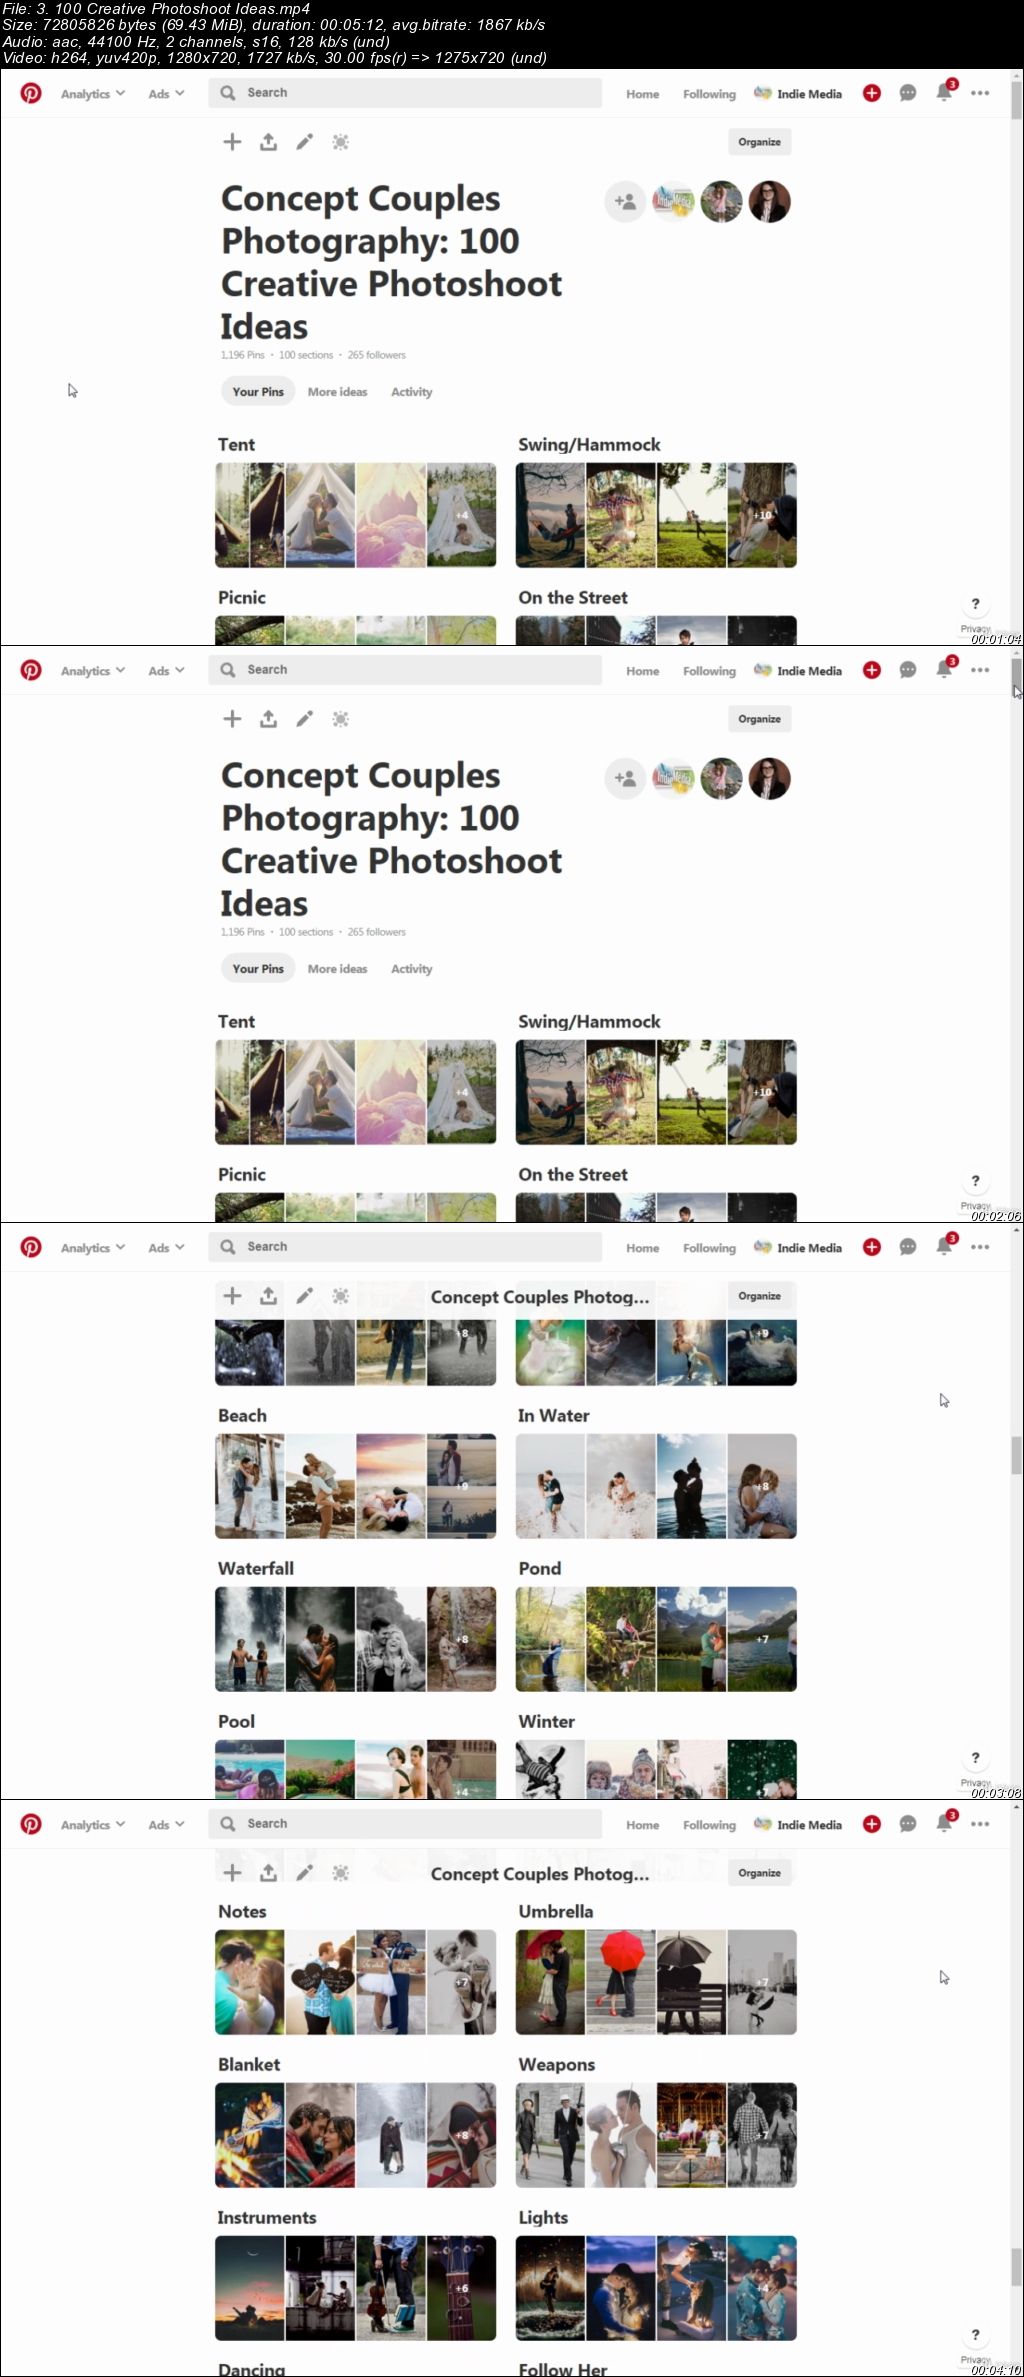  Concept Couples Photography: 100 Creative Photoshoot Ideas 